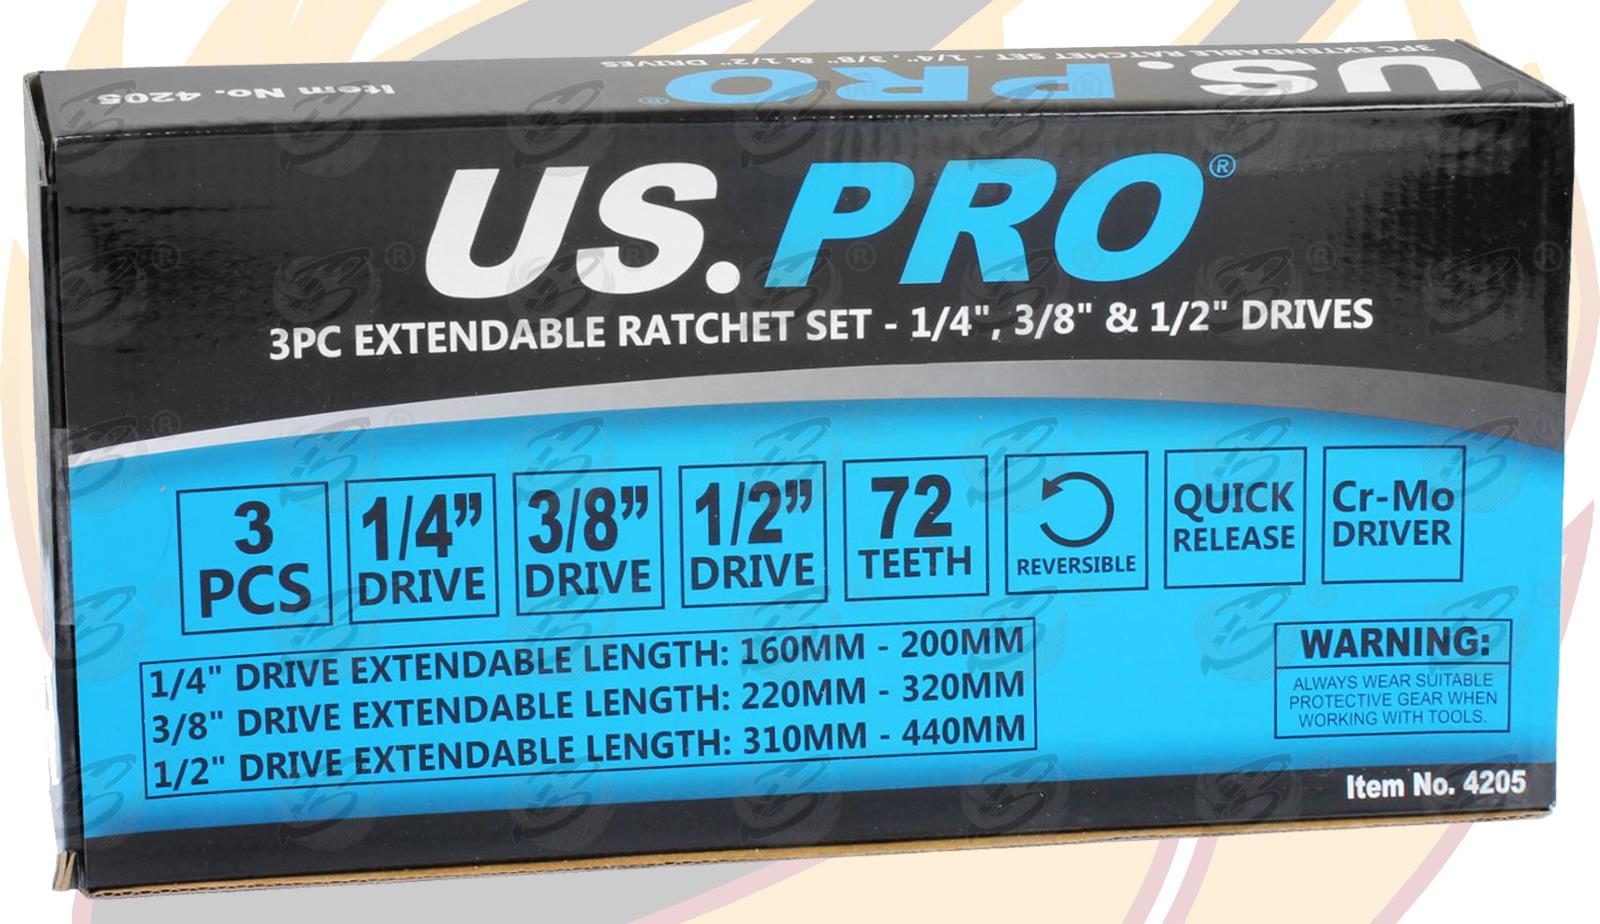 US PRO 3PCS 1/4" & 3/8" & 1/2" DRIVE 72 TOOTH EXTENDABLE RATCHET HANDLES